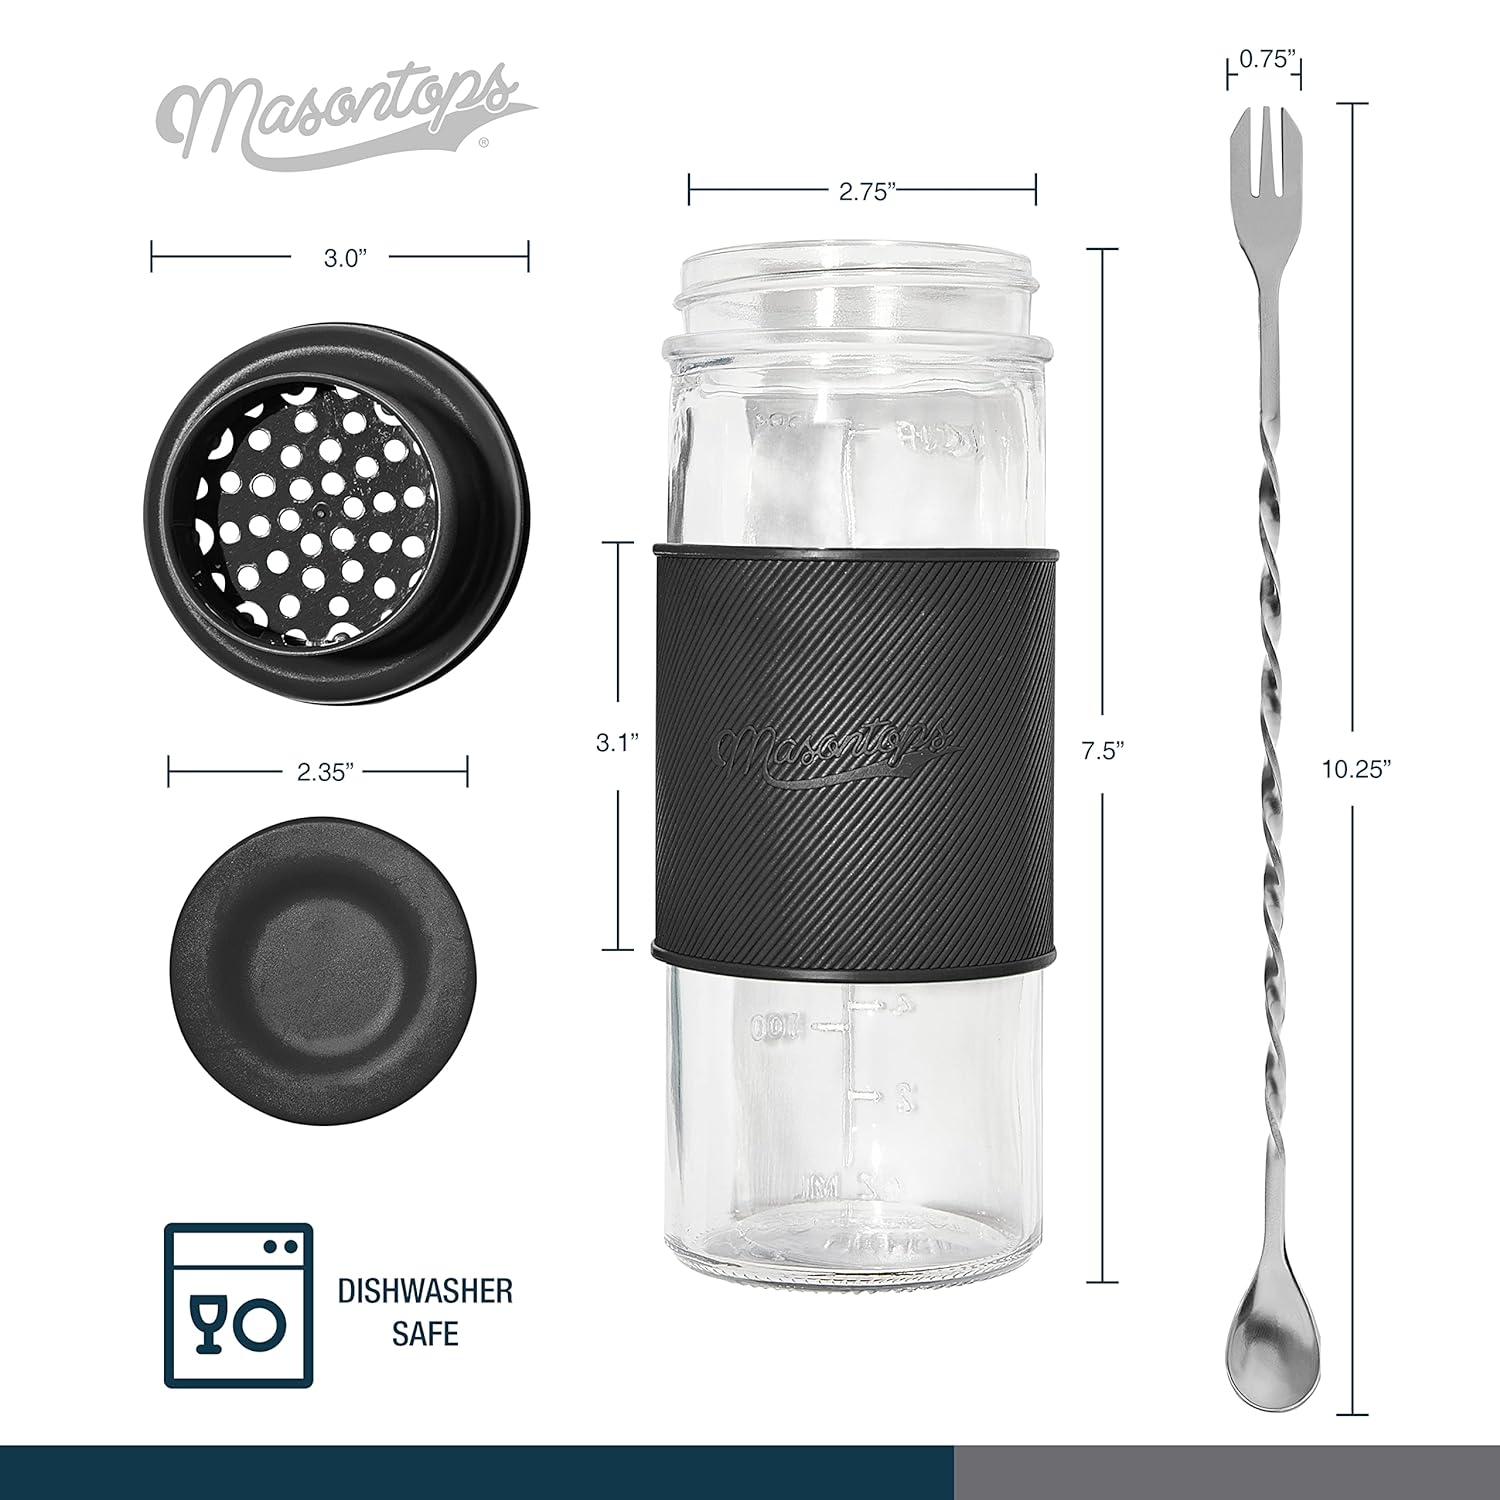 Masontops Cocktail Shaker Set – Glass Mason Jar Drink Shaker – 4 PC Set with Metal Swizzle Stick - Black